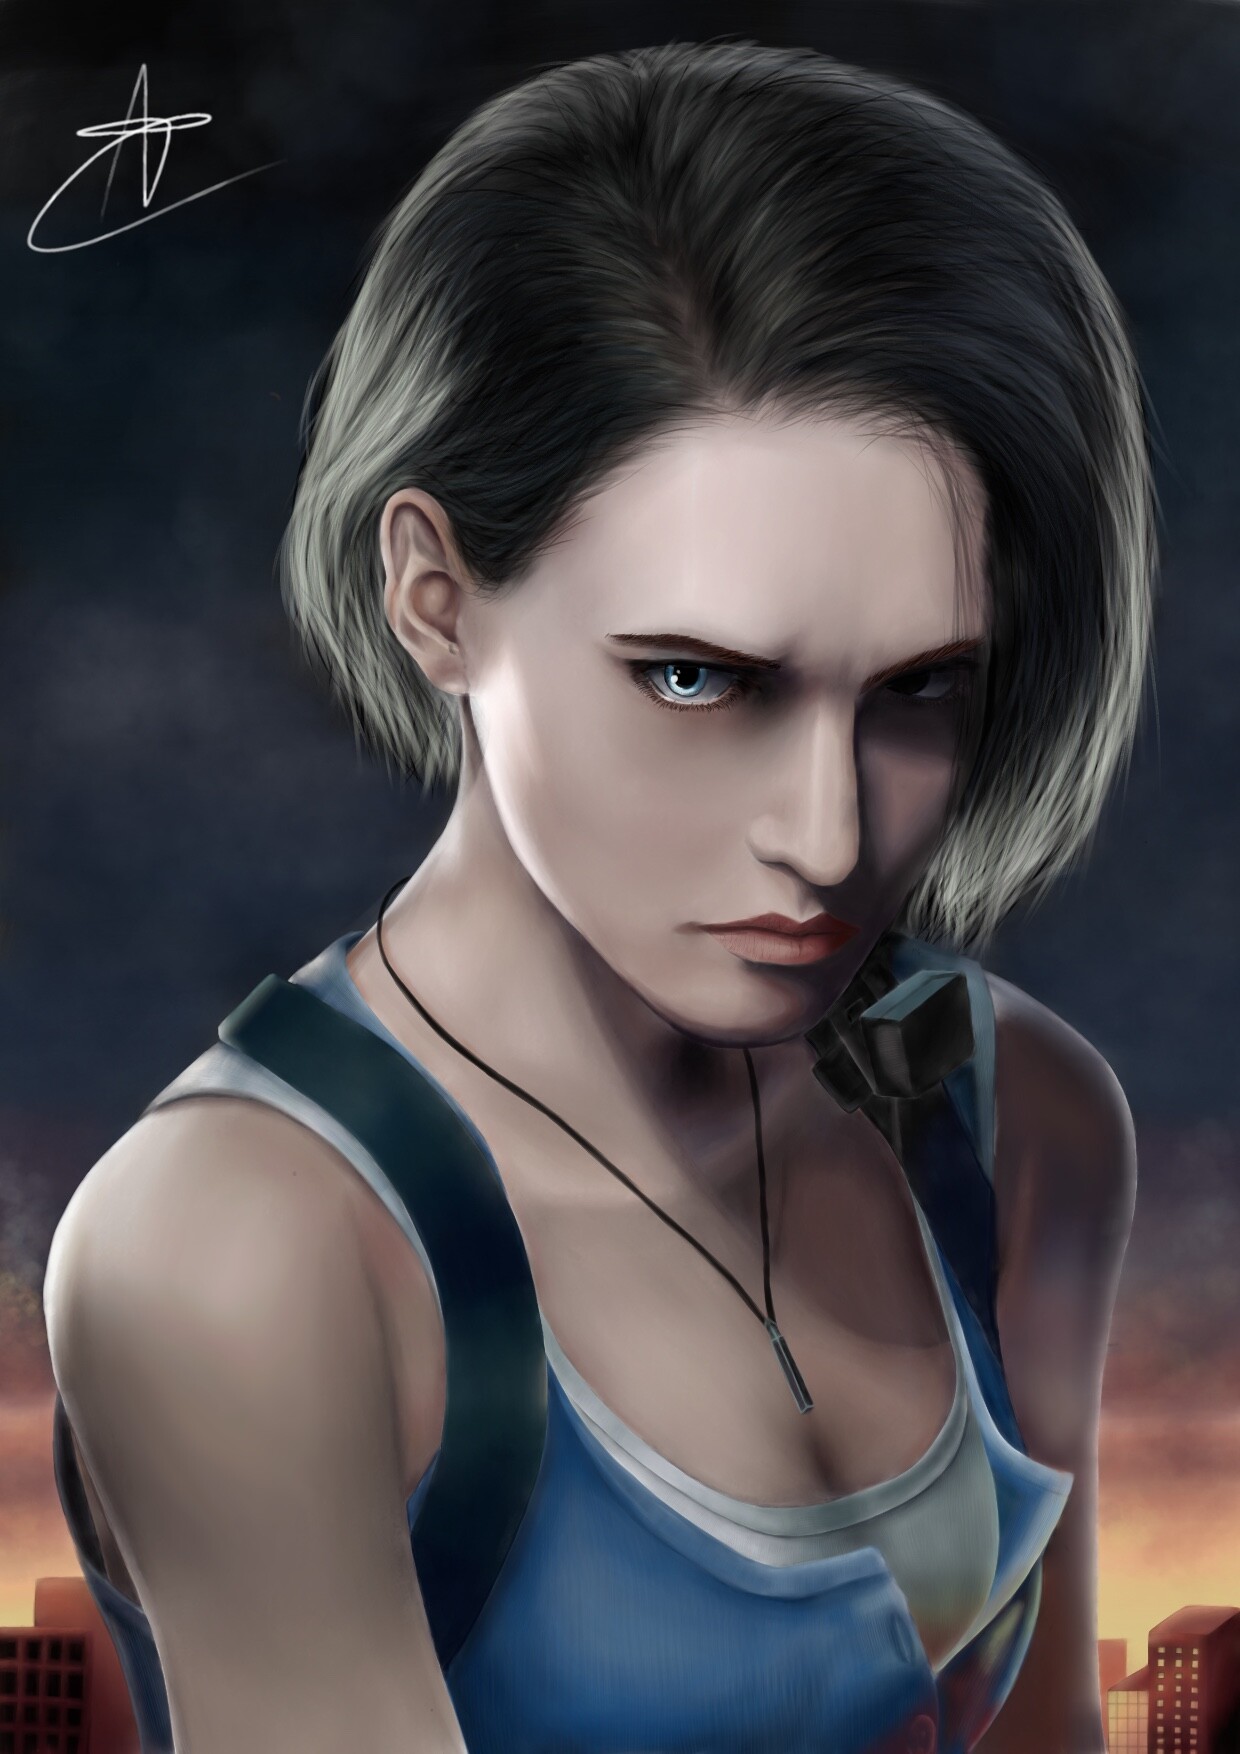 ArtStation - Jill Valentine - Resident Evil